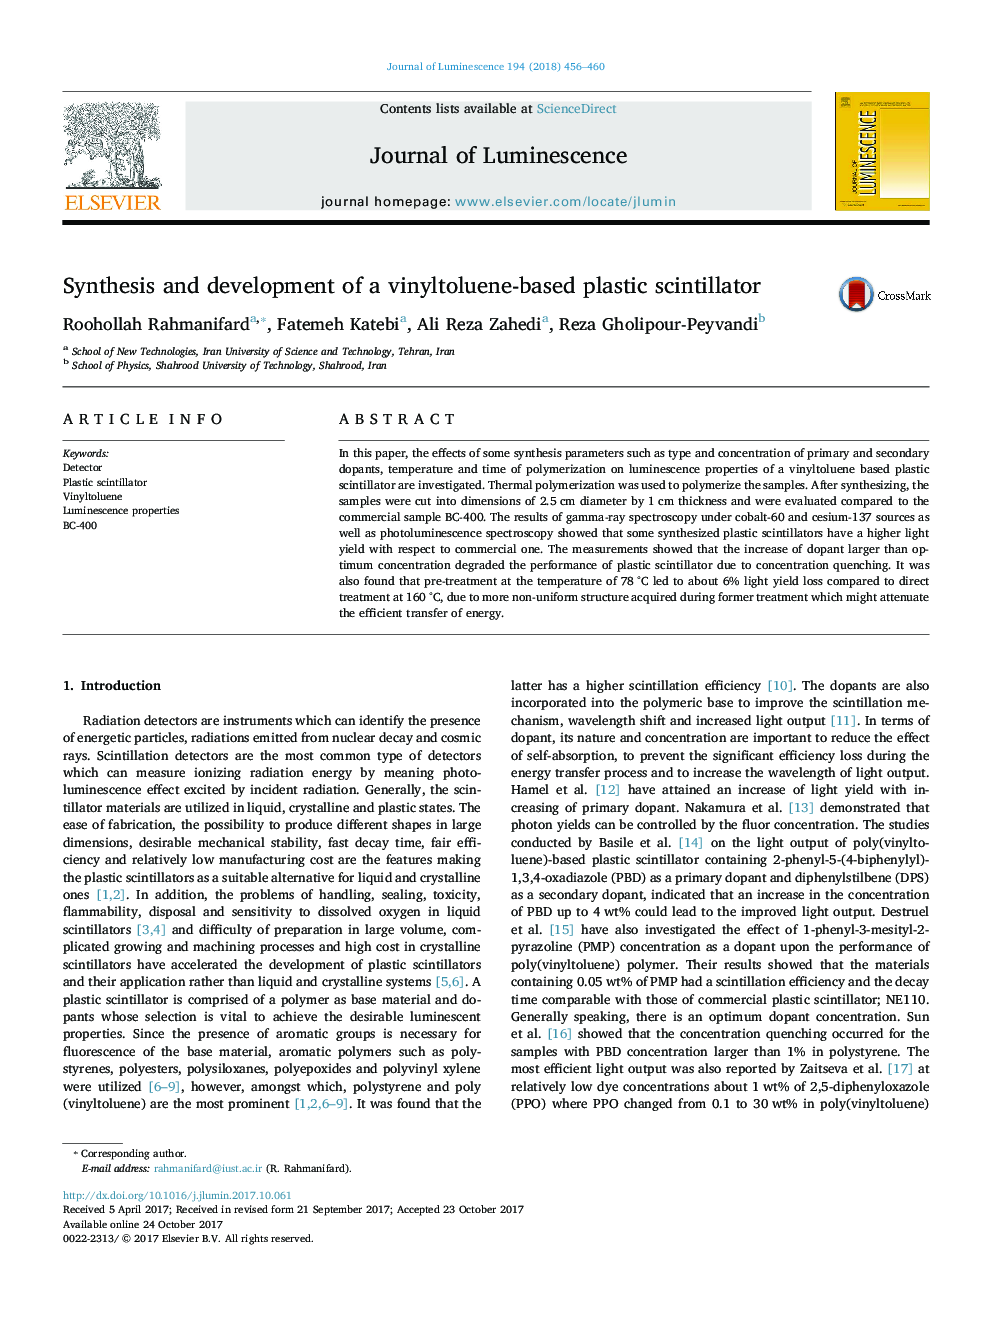 Synthesis and development of a vinyltoluene-based plastic scintillator